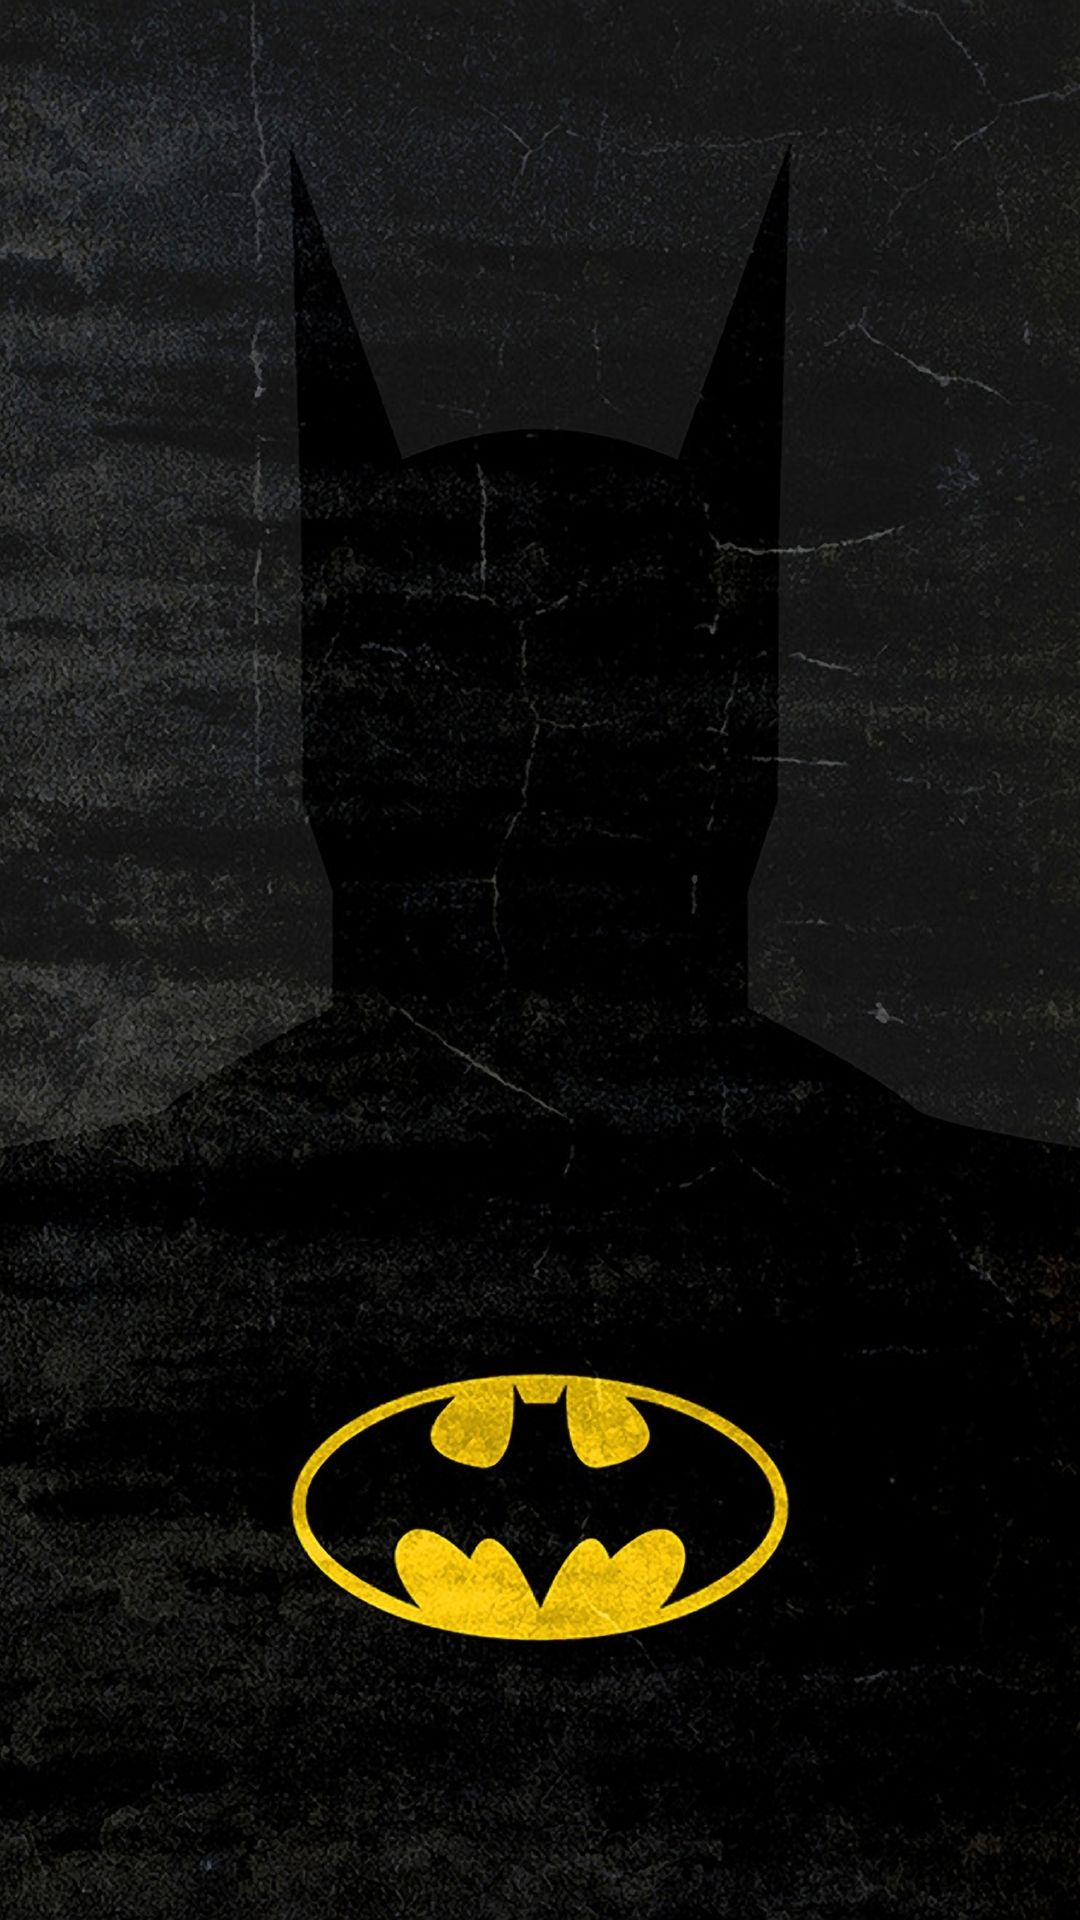 Top Superhero Phone Wallpaper Images for Pinterest